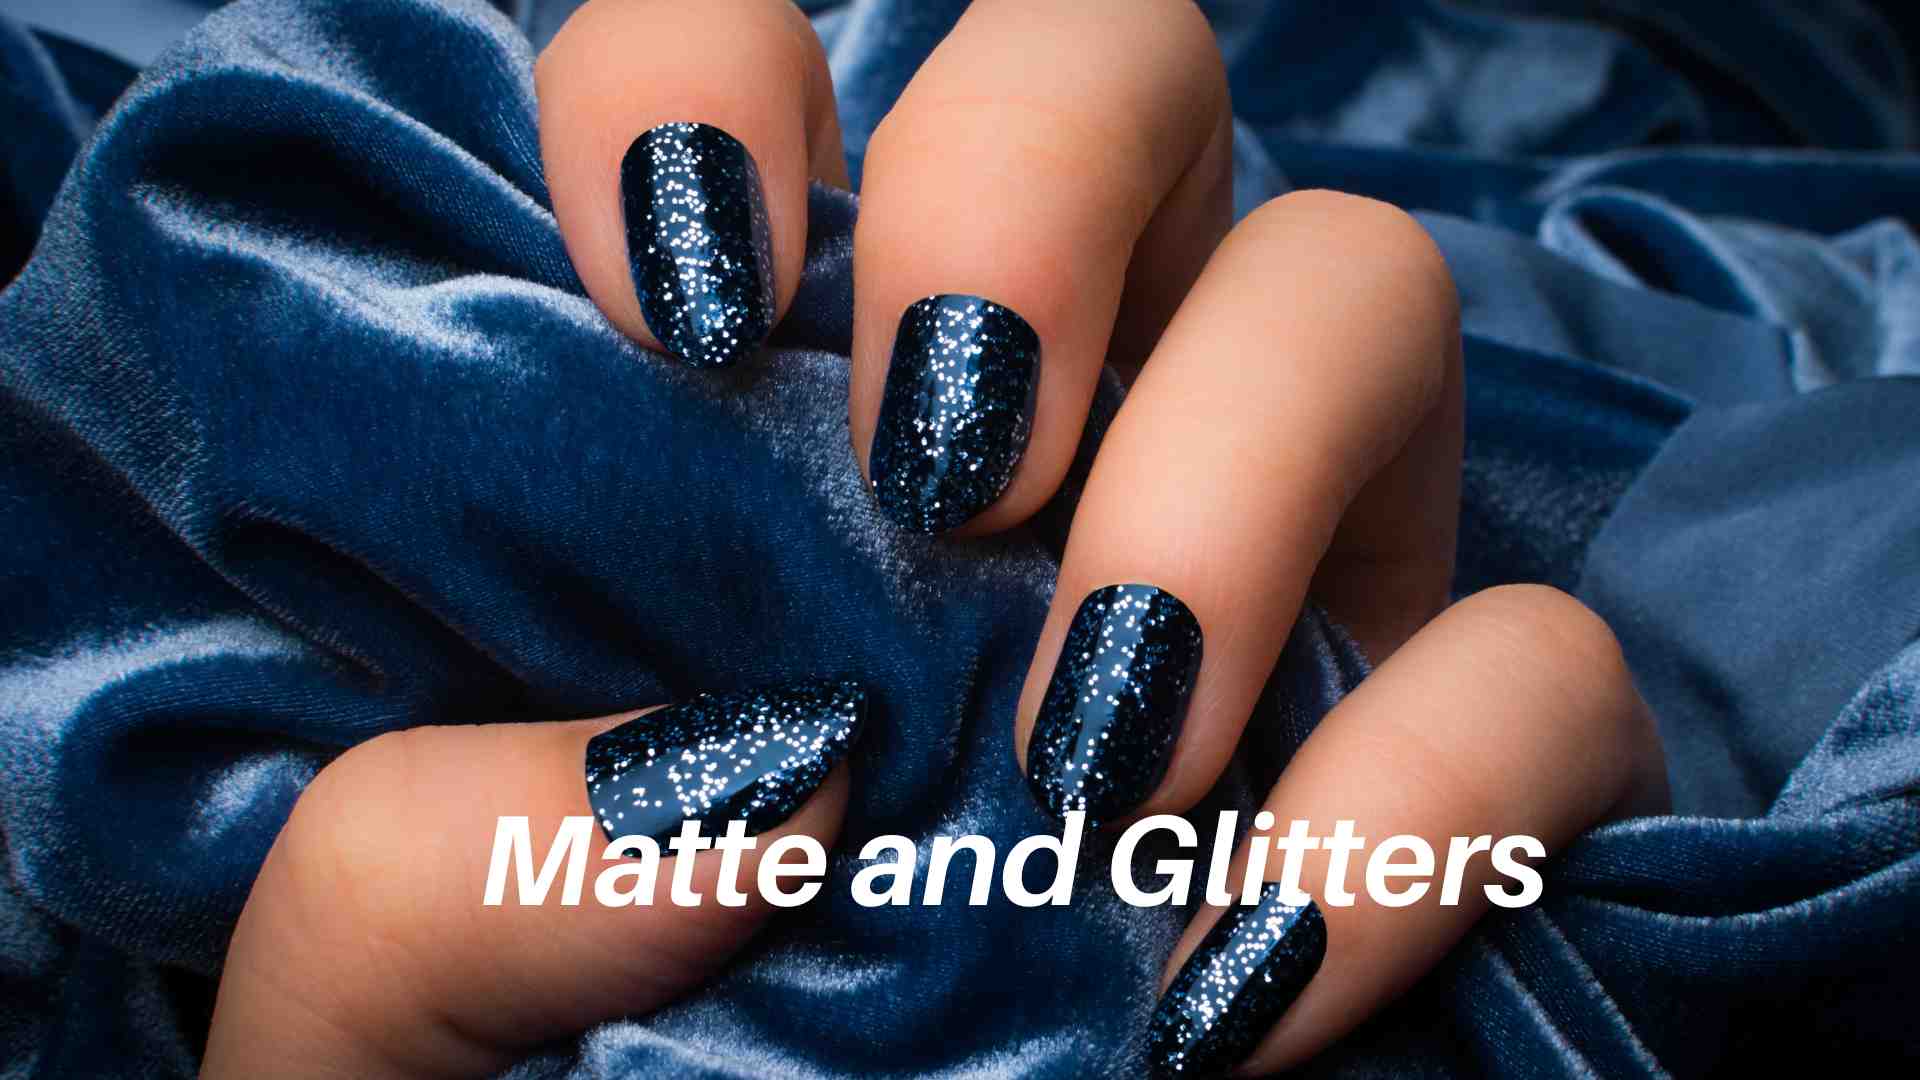 Matte and glitters